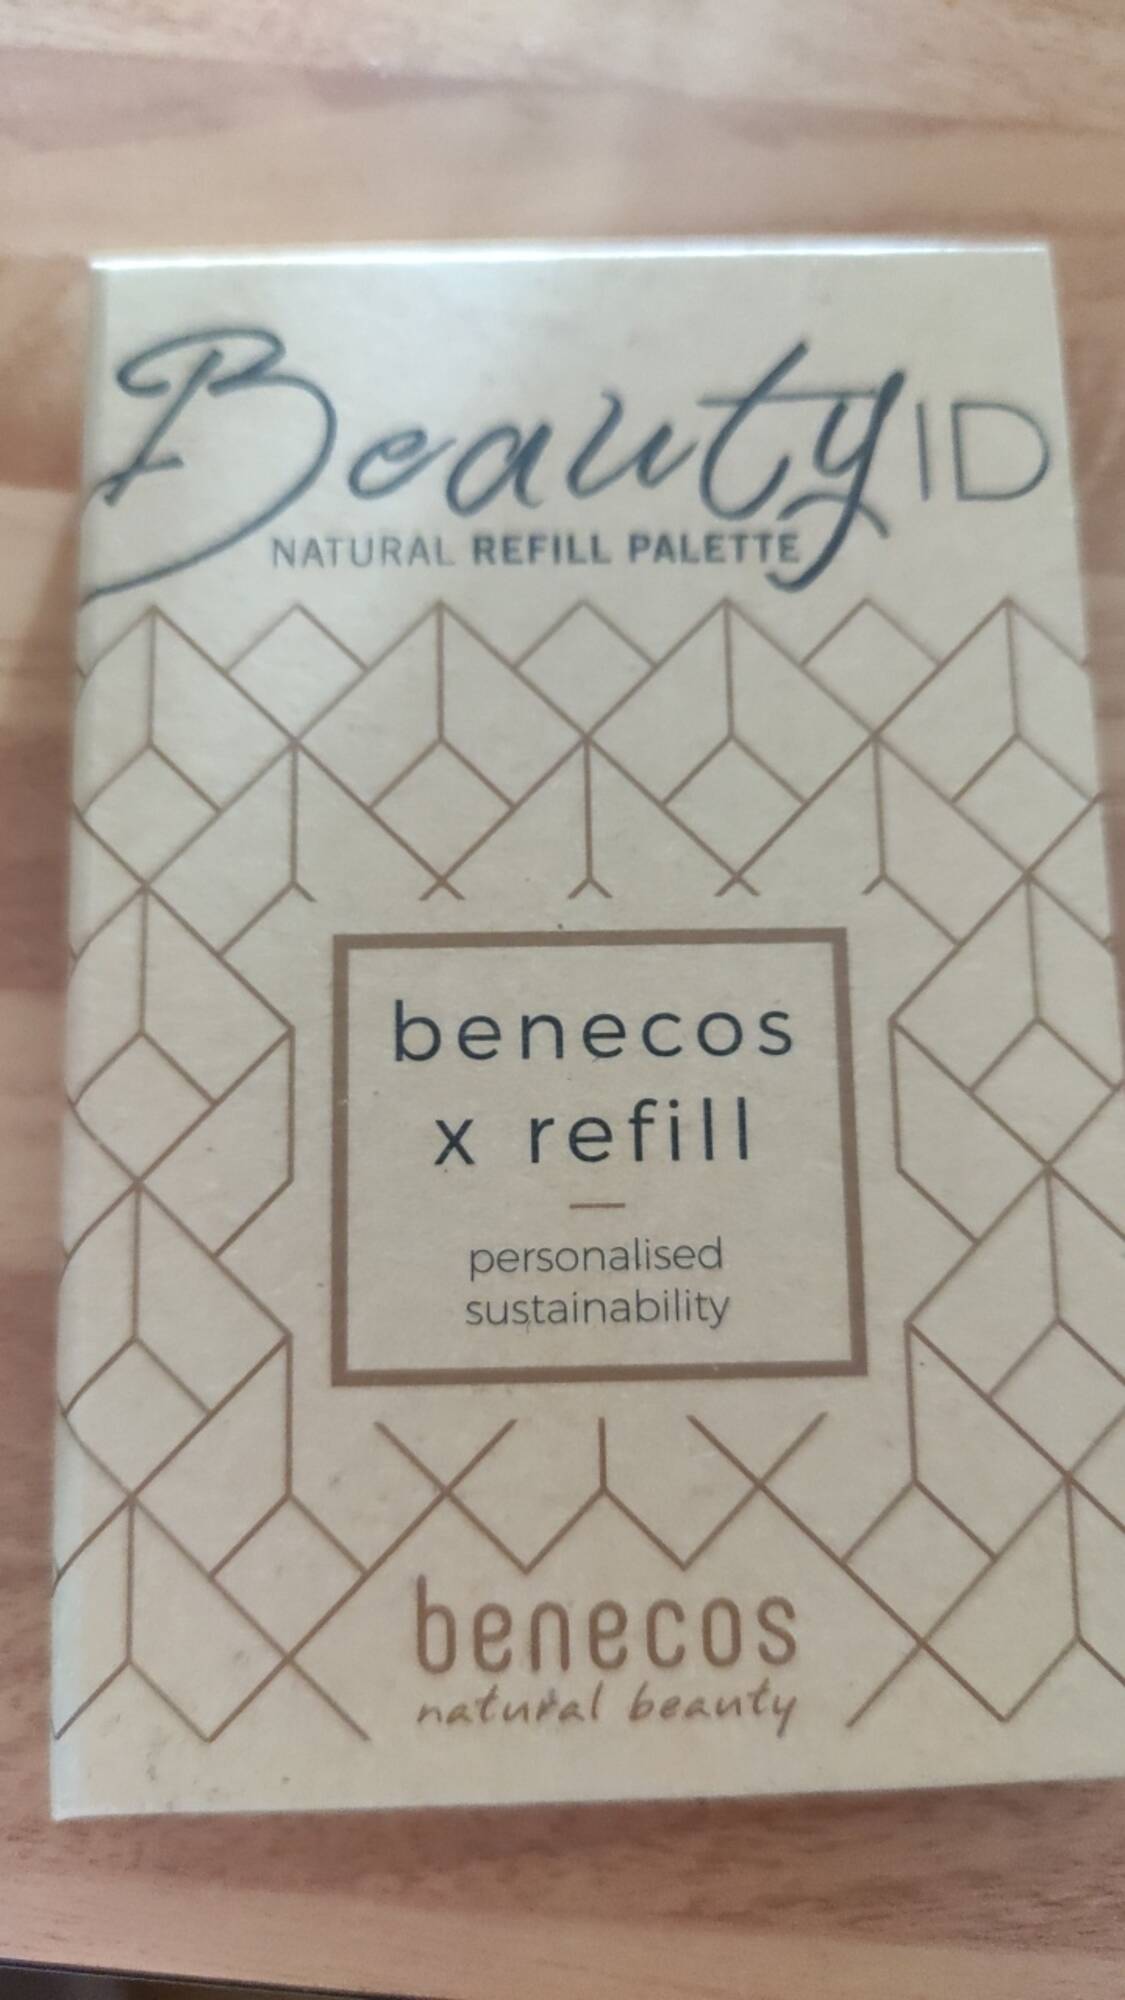 BENECOS - Beauty id natural refill palette 